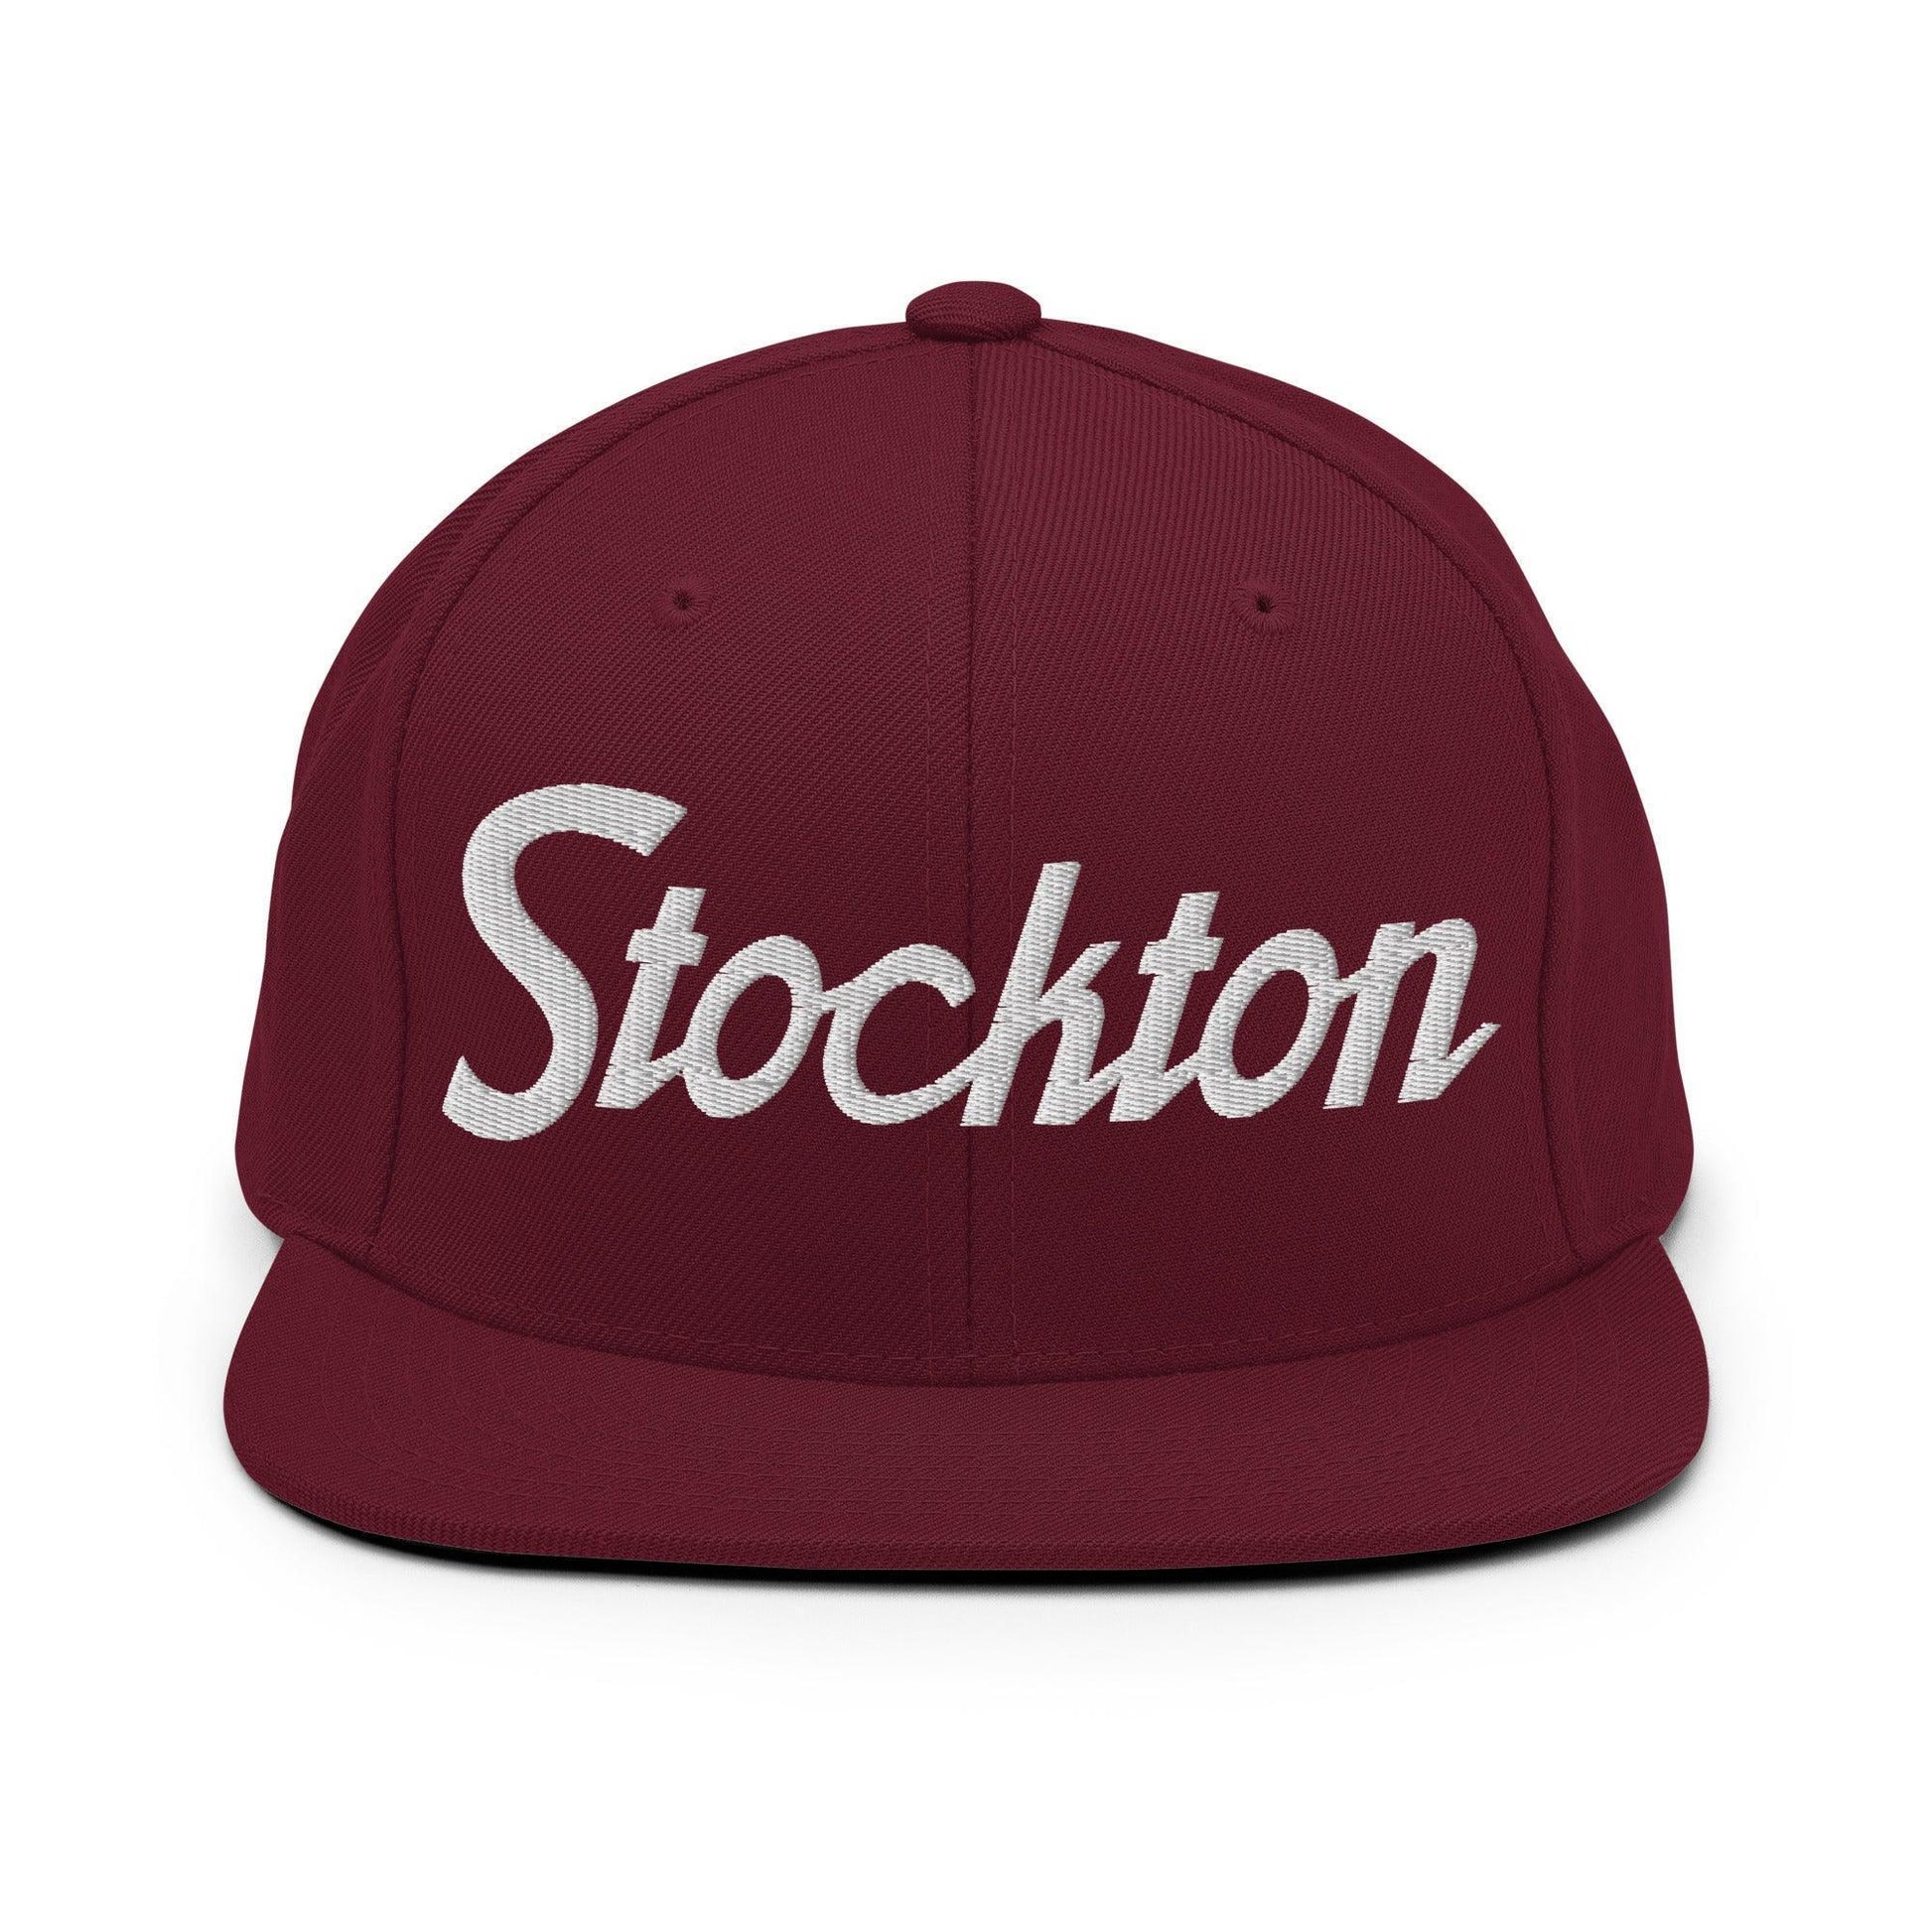 Stockton Script Snapback Hat Maroon